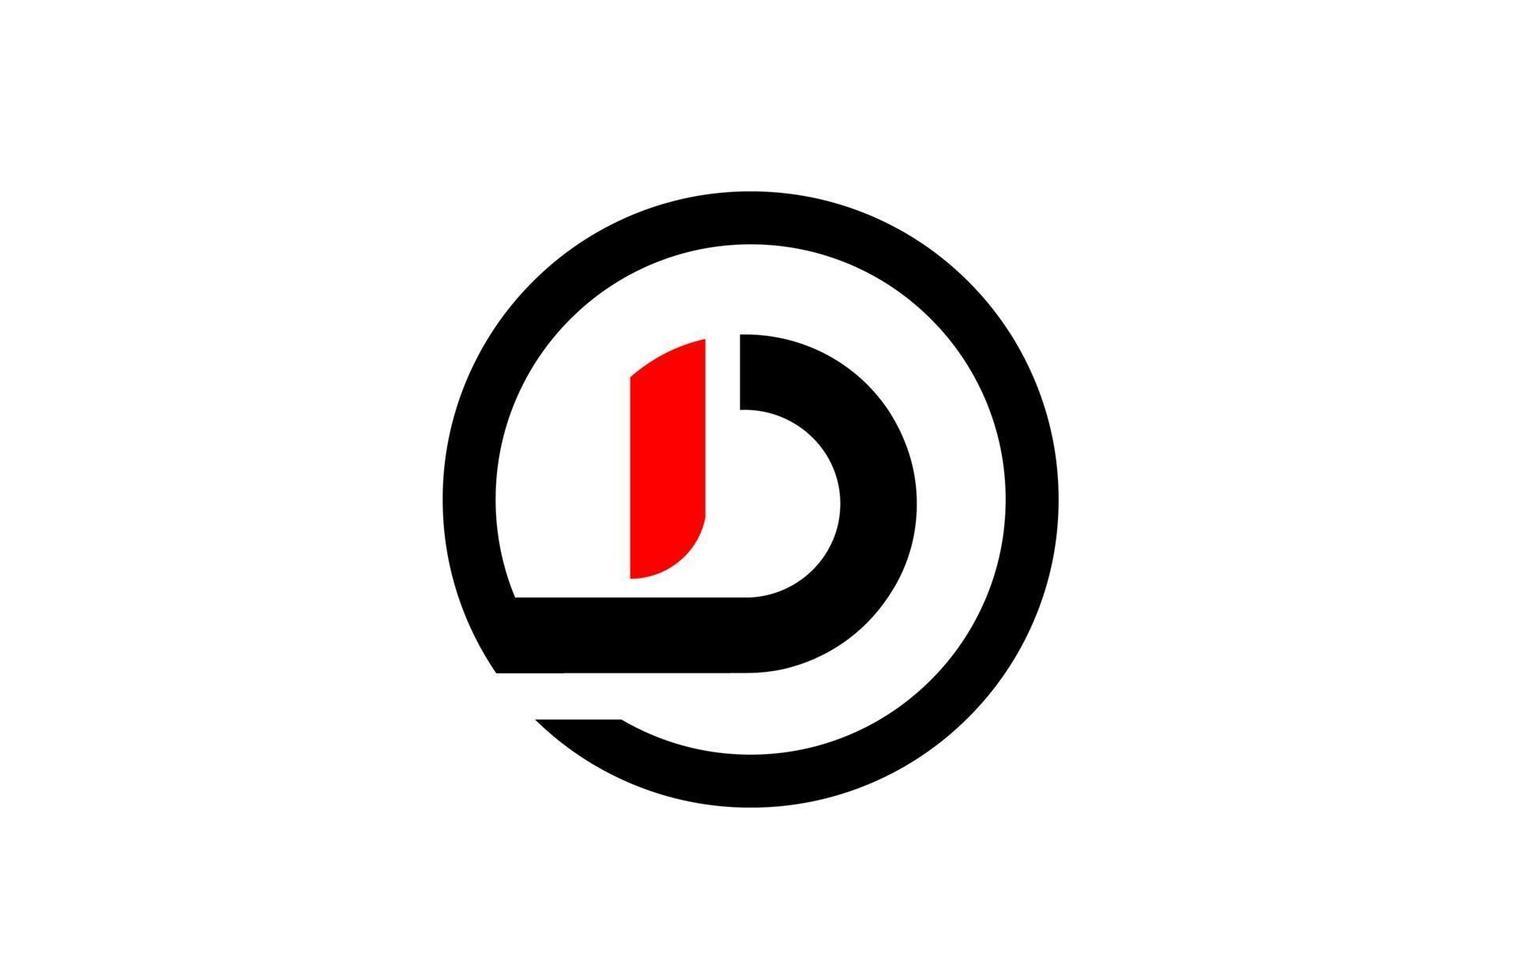 desenho da letra d do alfabeto circular para o ícone do logotipo da empresa vetor